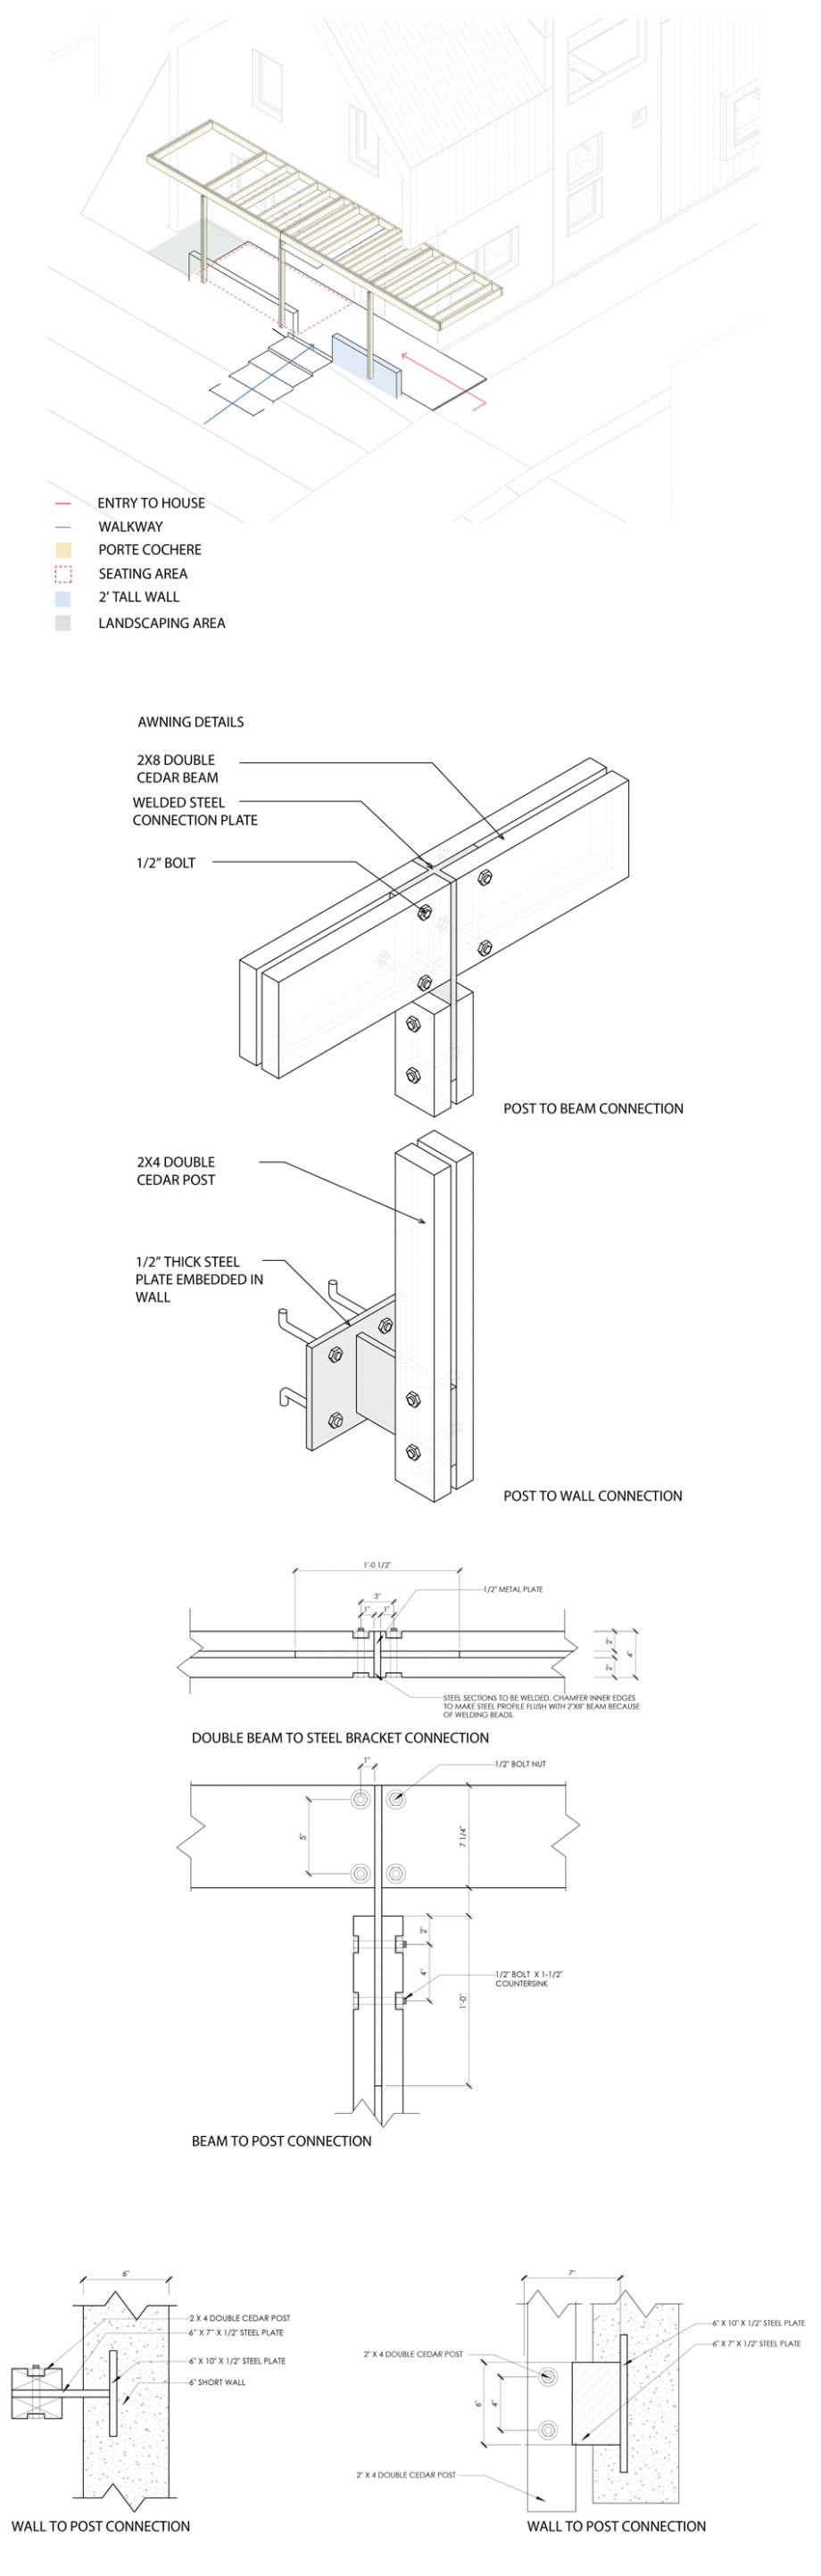 Design details for the custom awning. 